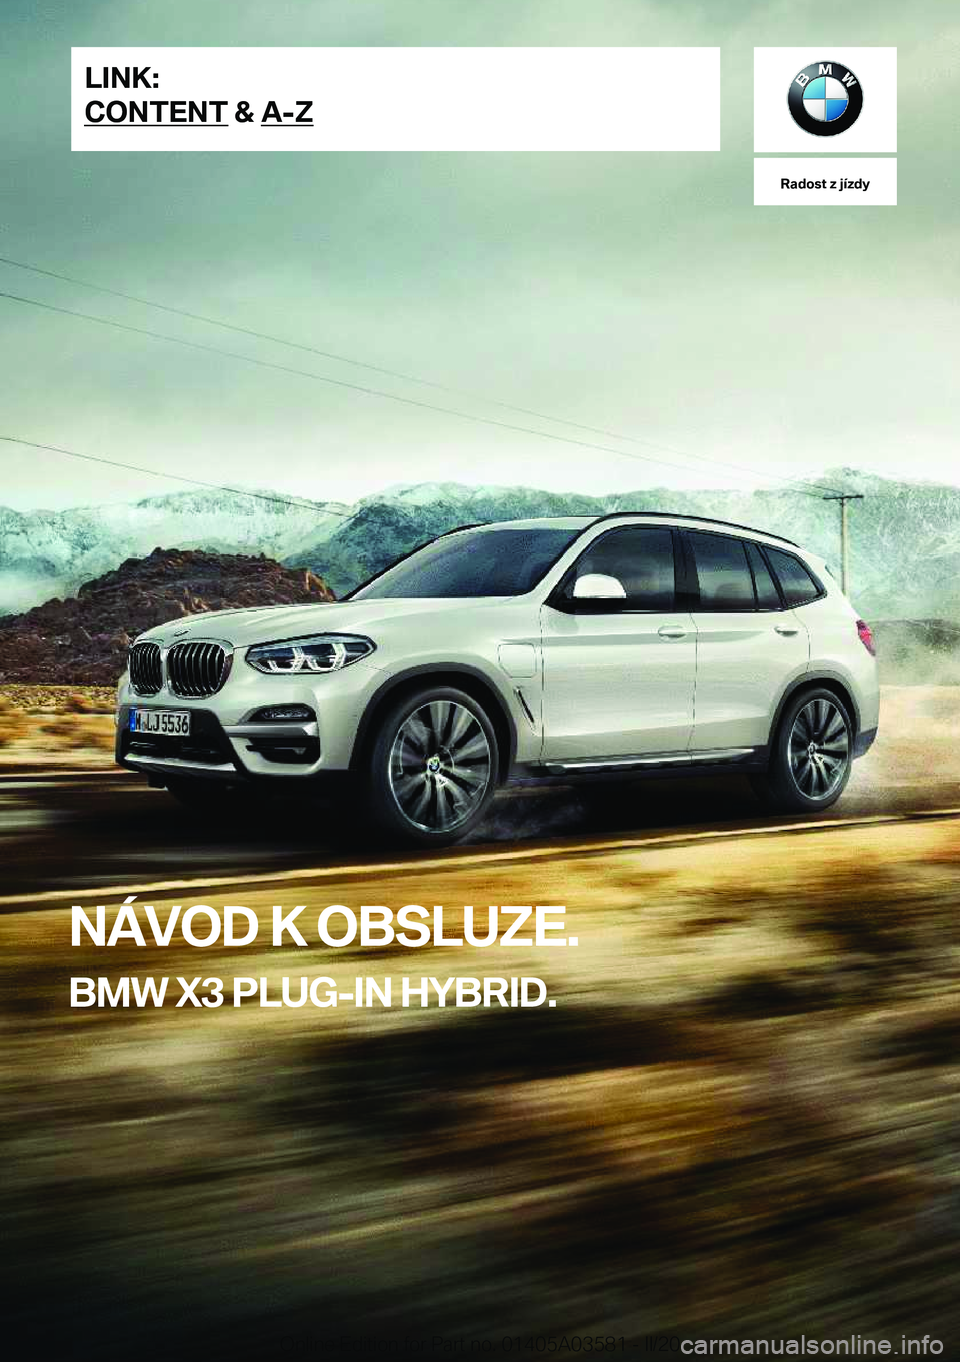 BMW X3 PLUG IN HYBRID 2020  Návod na použití (in Czech) �R�a�d�o�s�t��z��j�